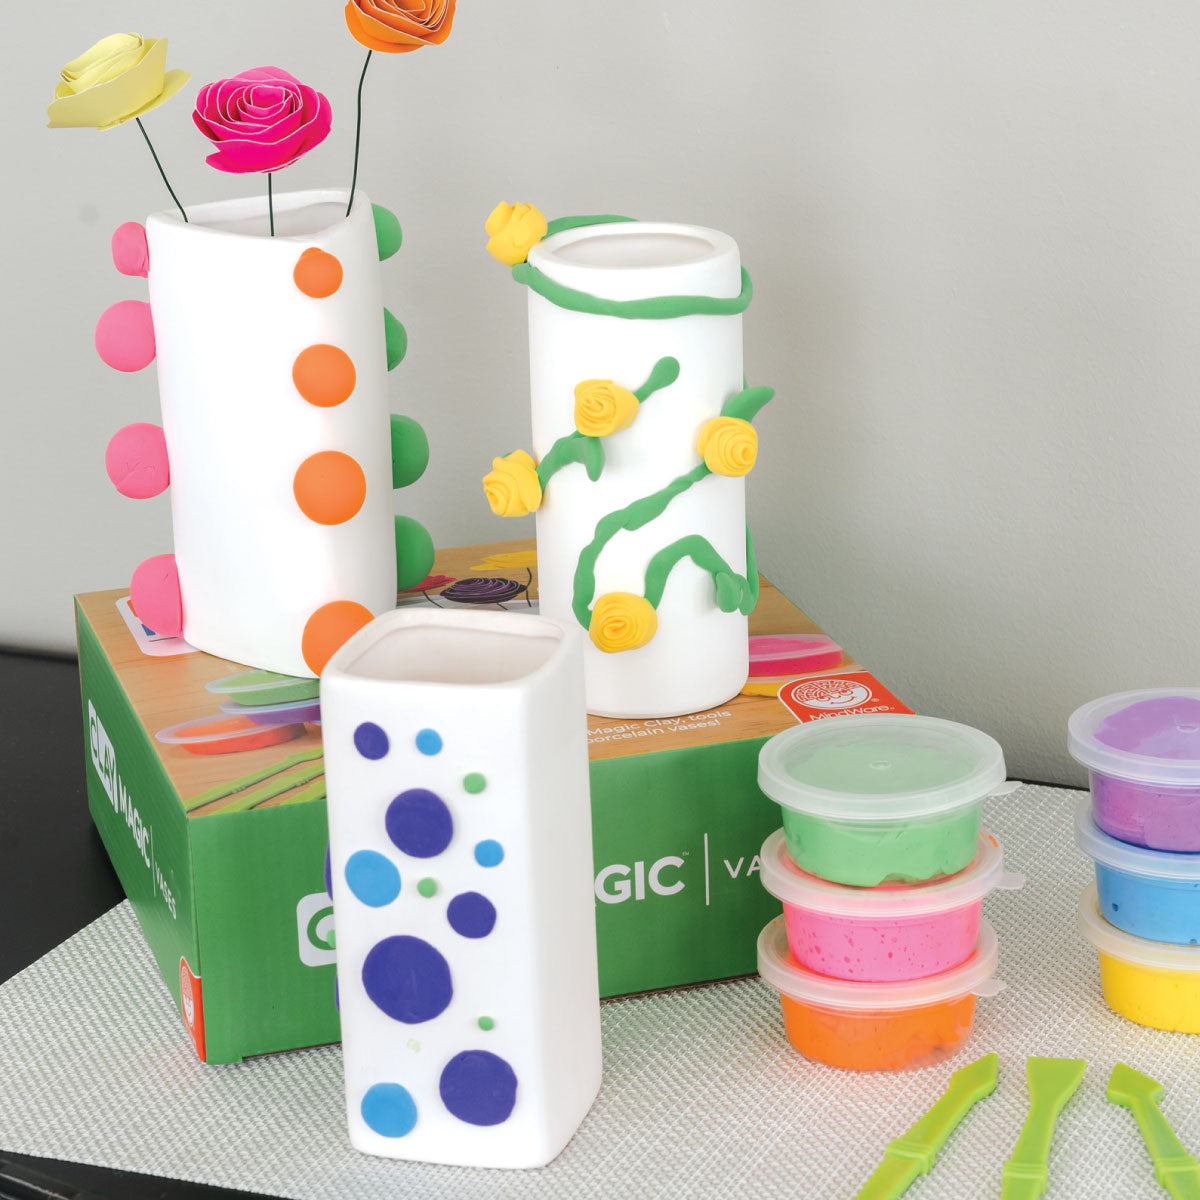 Clay Magic Vases – Happy Up Inc Toys & Games